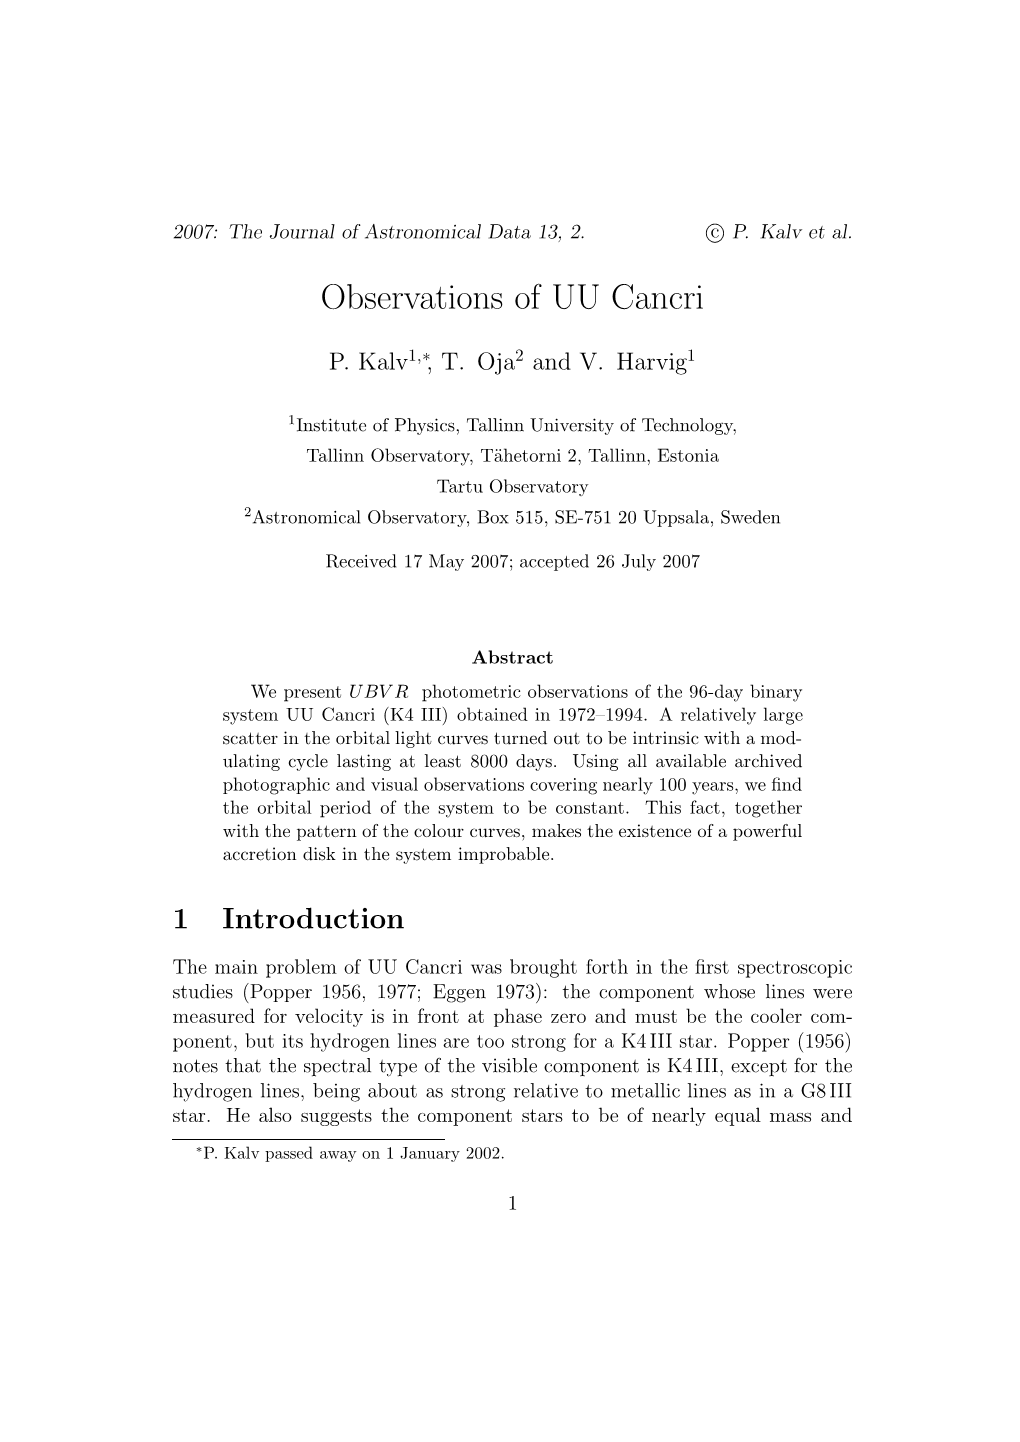 Observations of UU Cancri